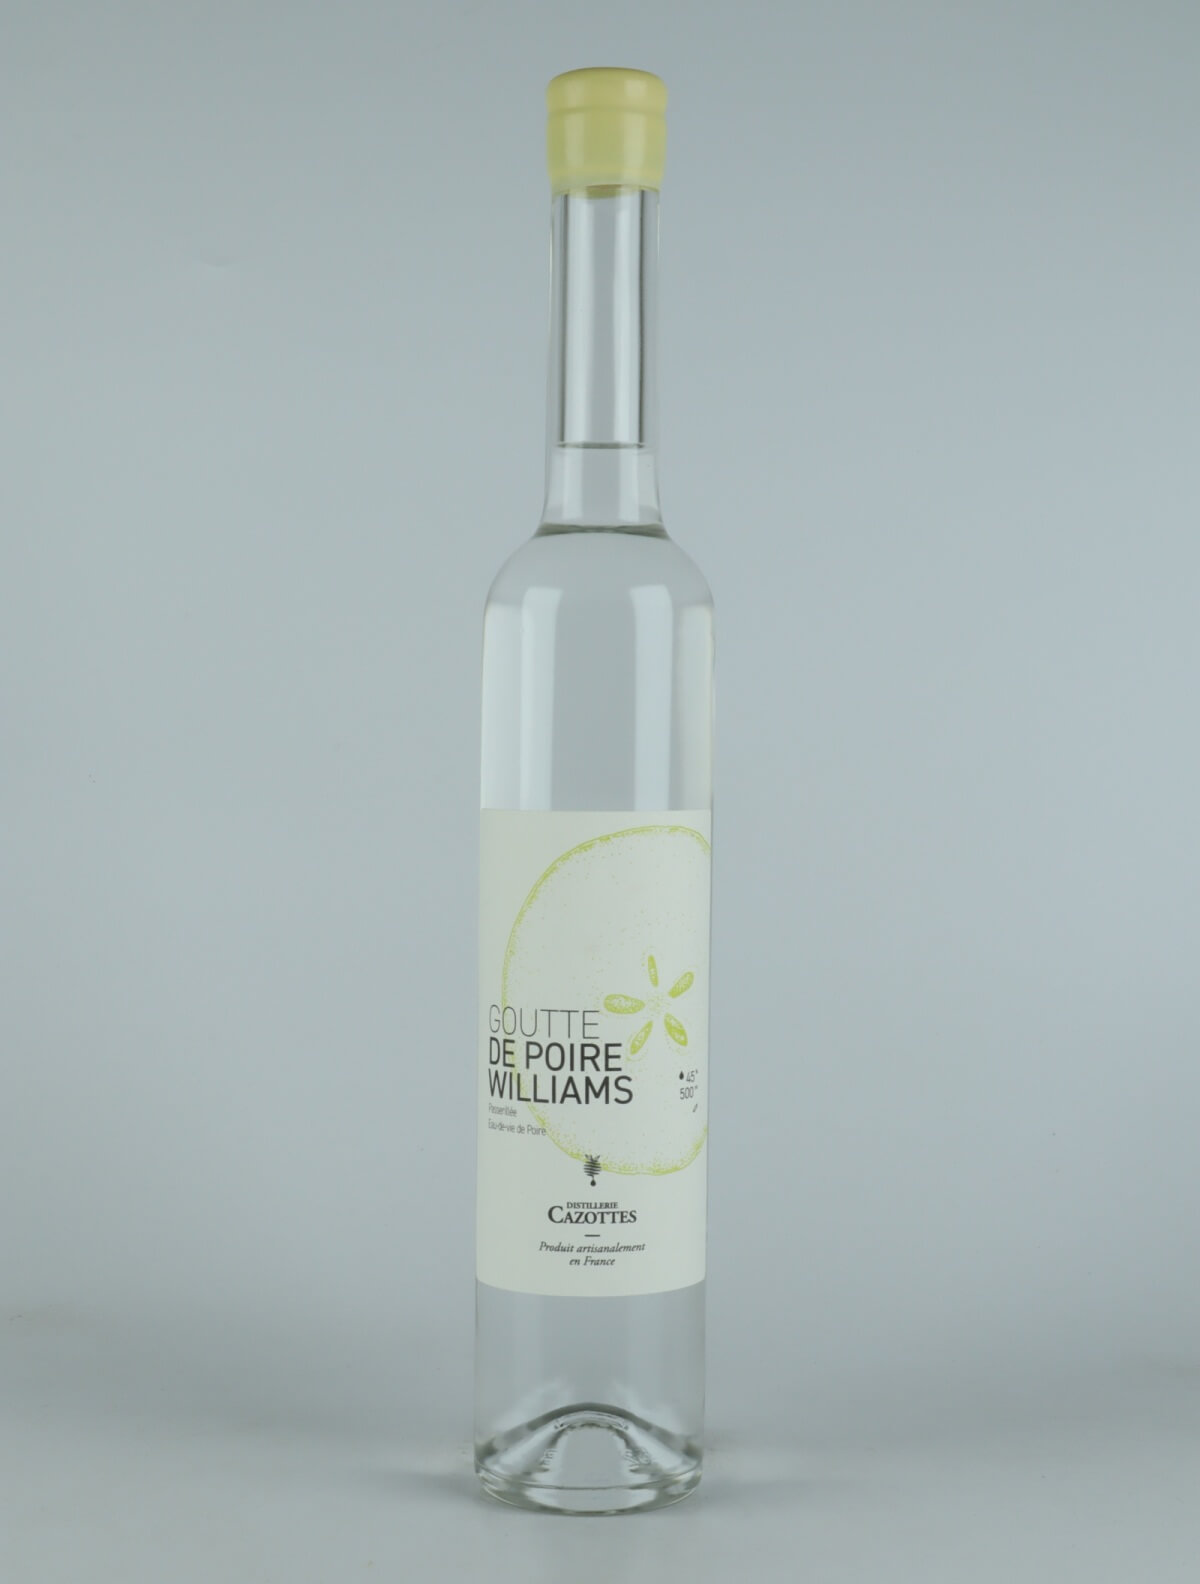 A bottle 2019 Poire Williams - Eau de Vie Spirits from Laurent Cazottes, Tarn in France